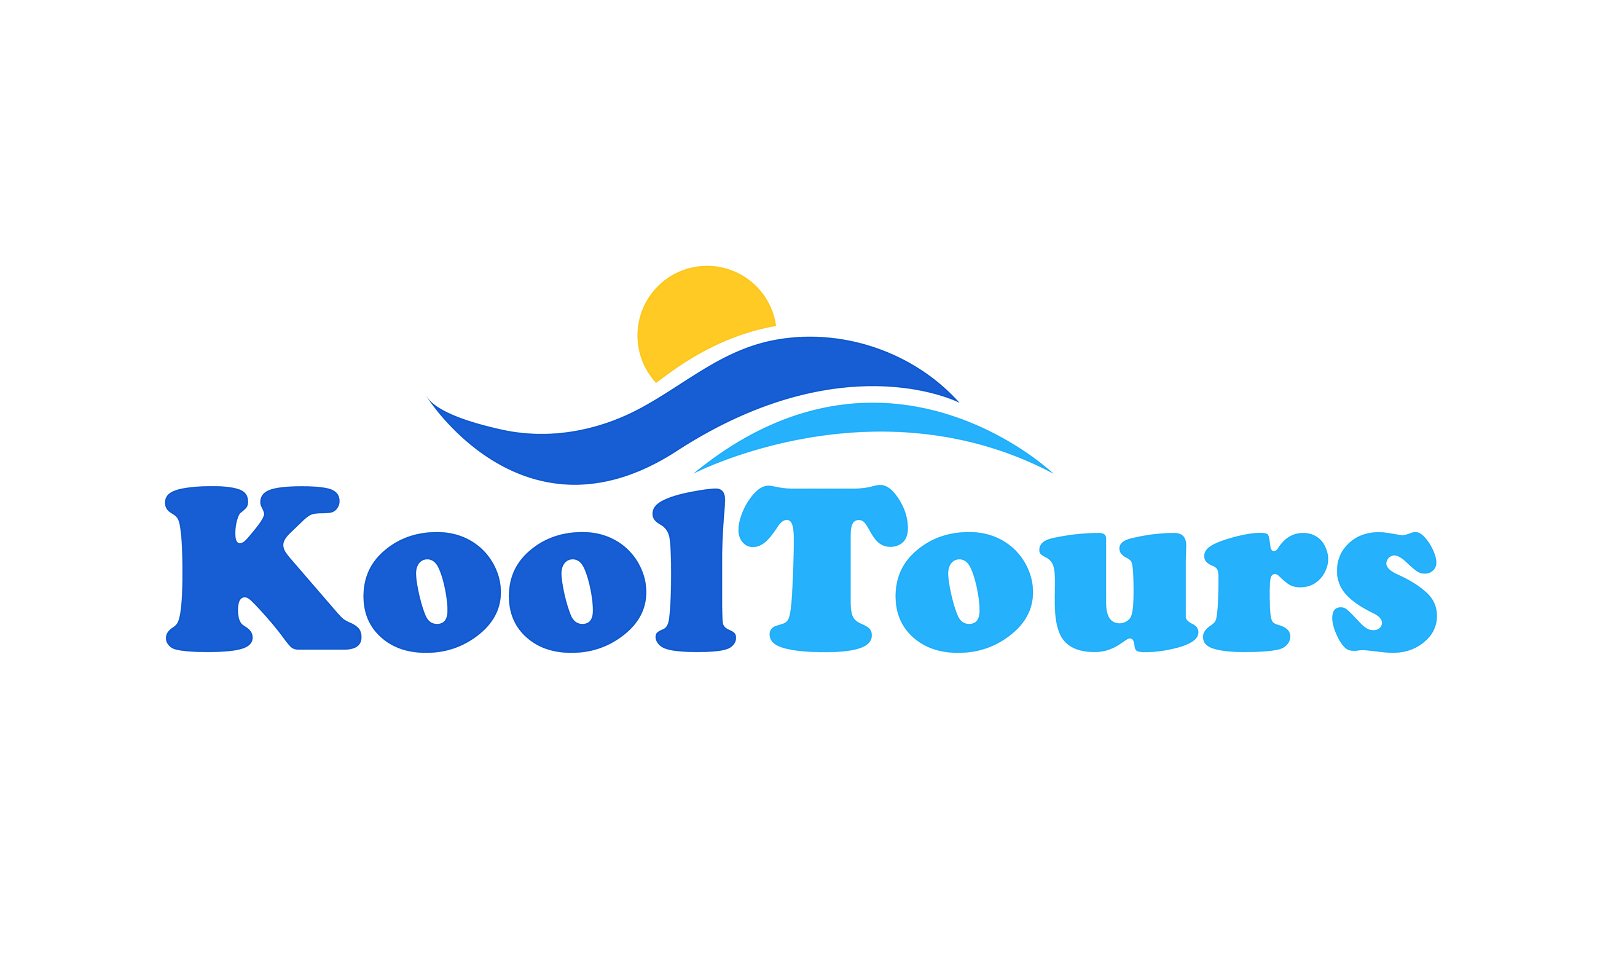 KoolTours.com - Creative brandable domain for sale